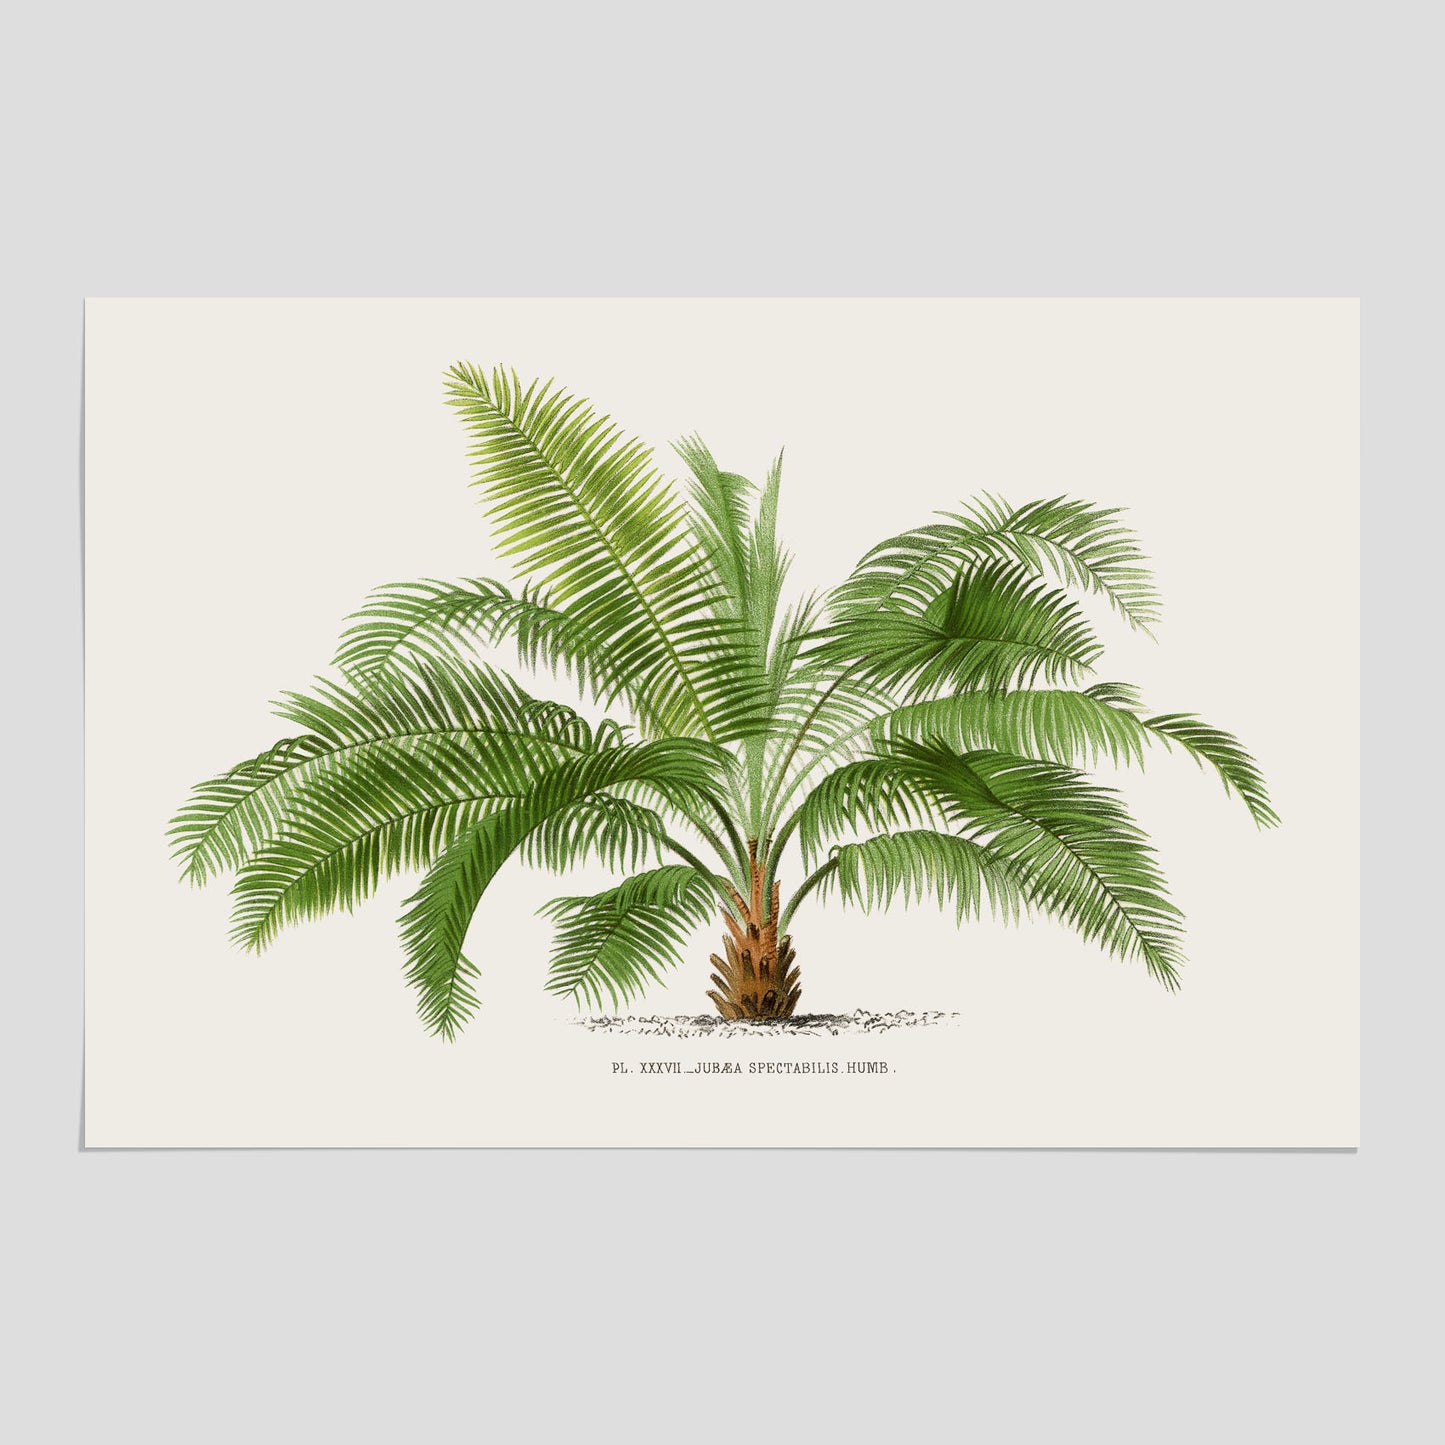 Botanisk vintageposter med en illustration av ett palmträd, ritad av Pieter Joseph de Pannemaeker